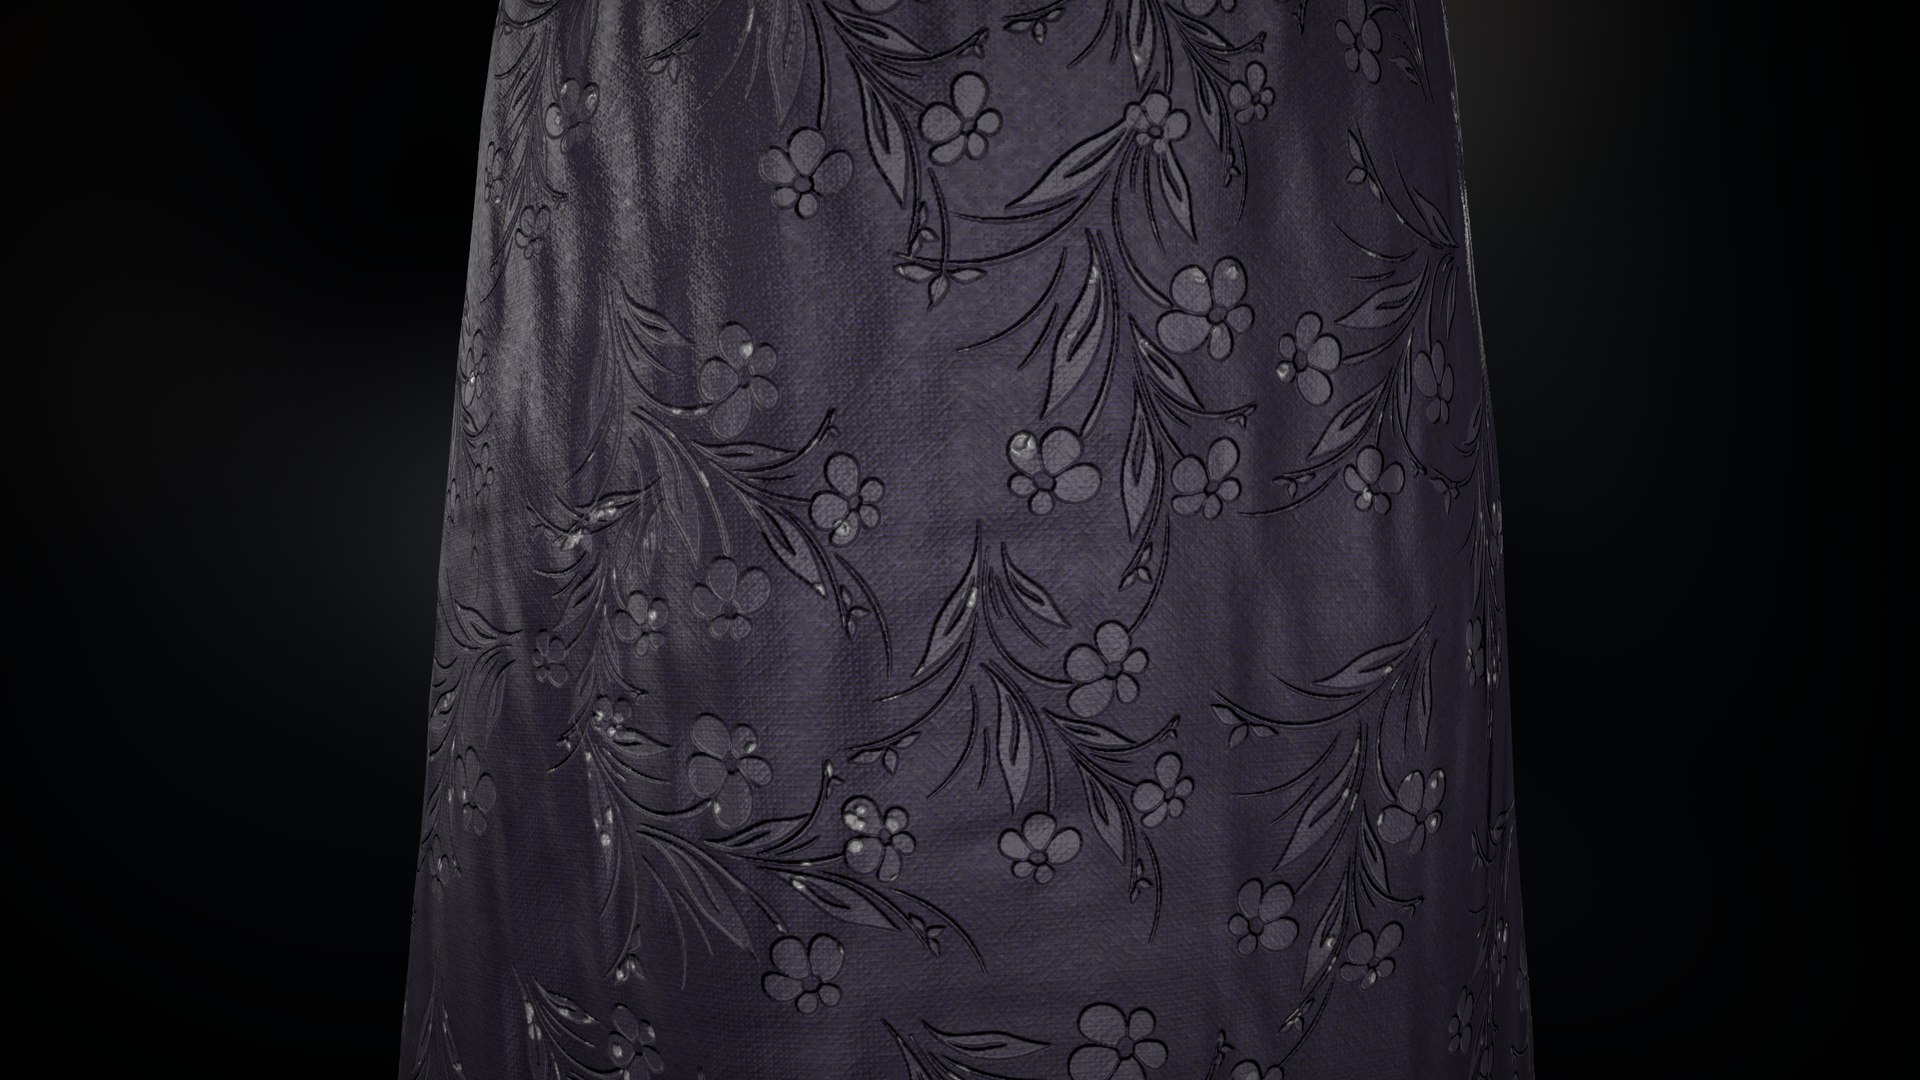 Violet dress 3D model - TurboSquid 1657434